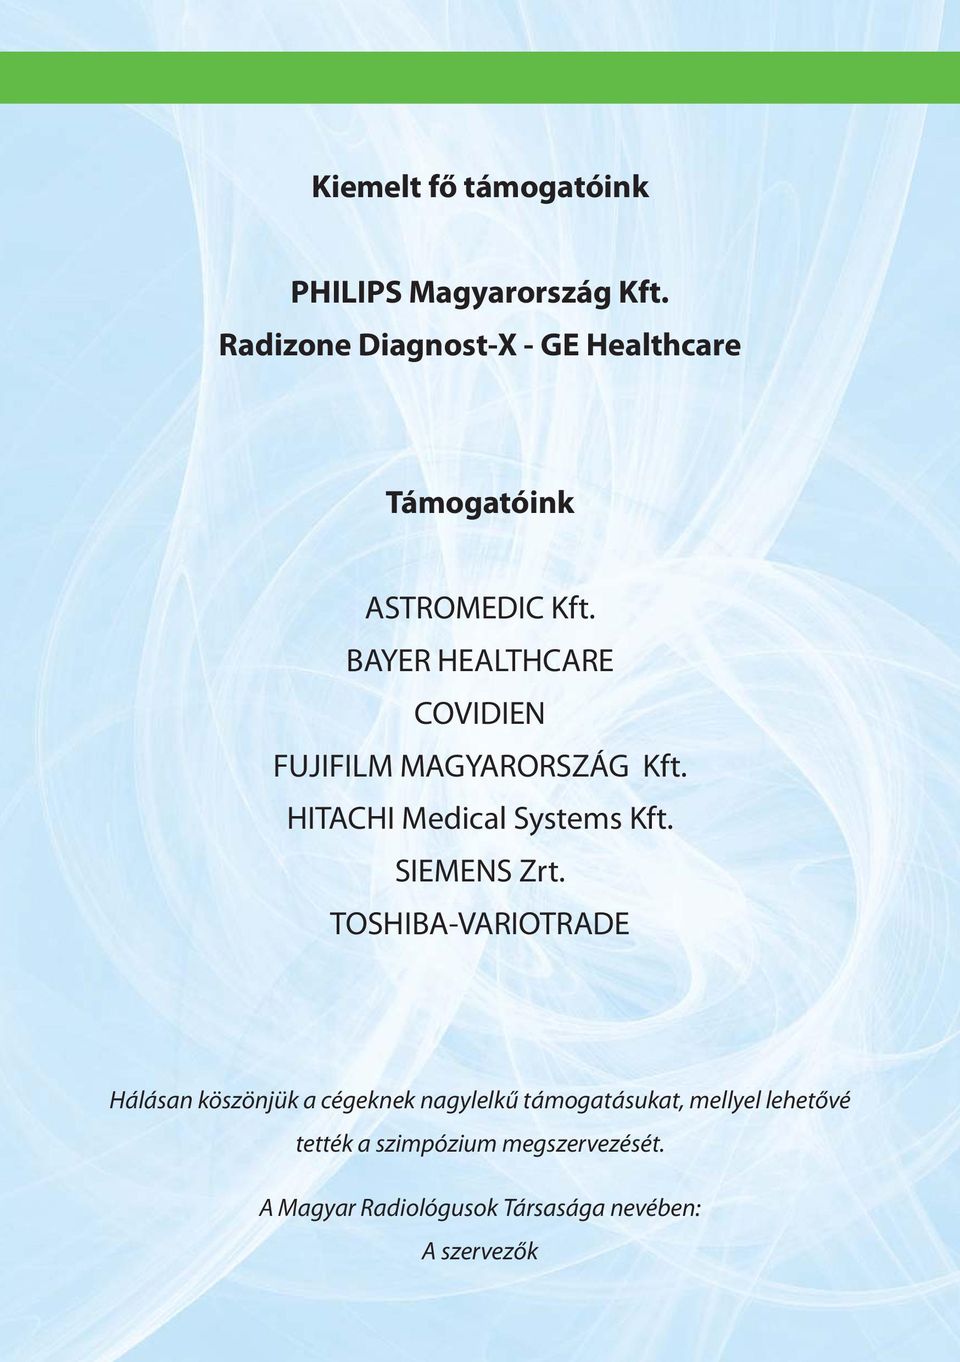 BAYER HEALTHCARE COVIDIEN FUJIFILM MAGYARORSZÁG Kft. HITACHI Medical Systems Kft. SIEMENS Zrt.